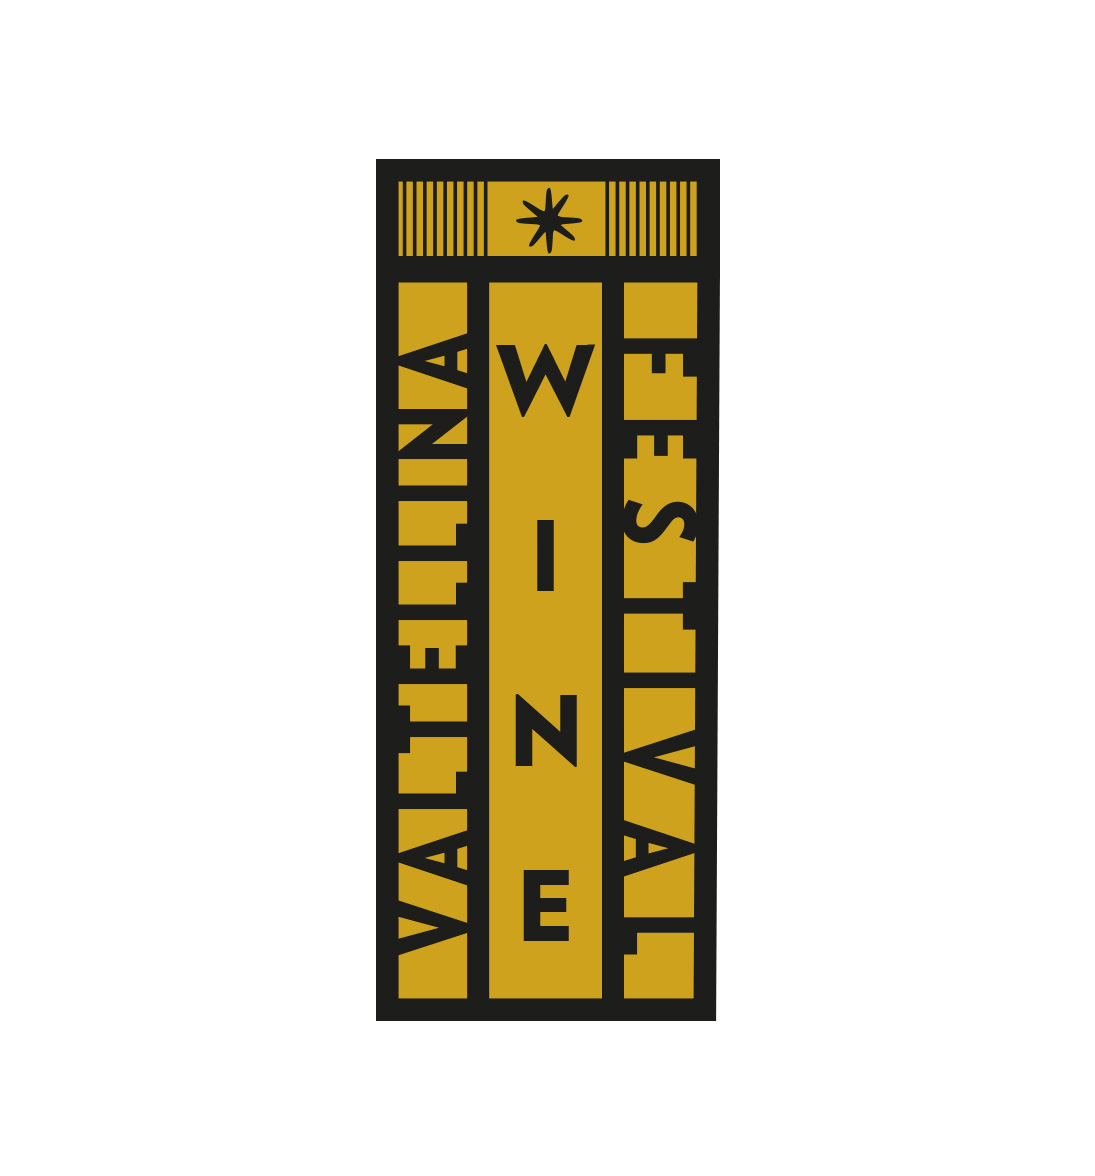 Valtellina Wine Festival